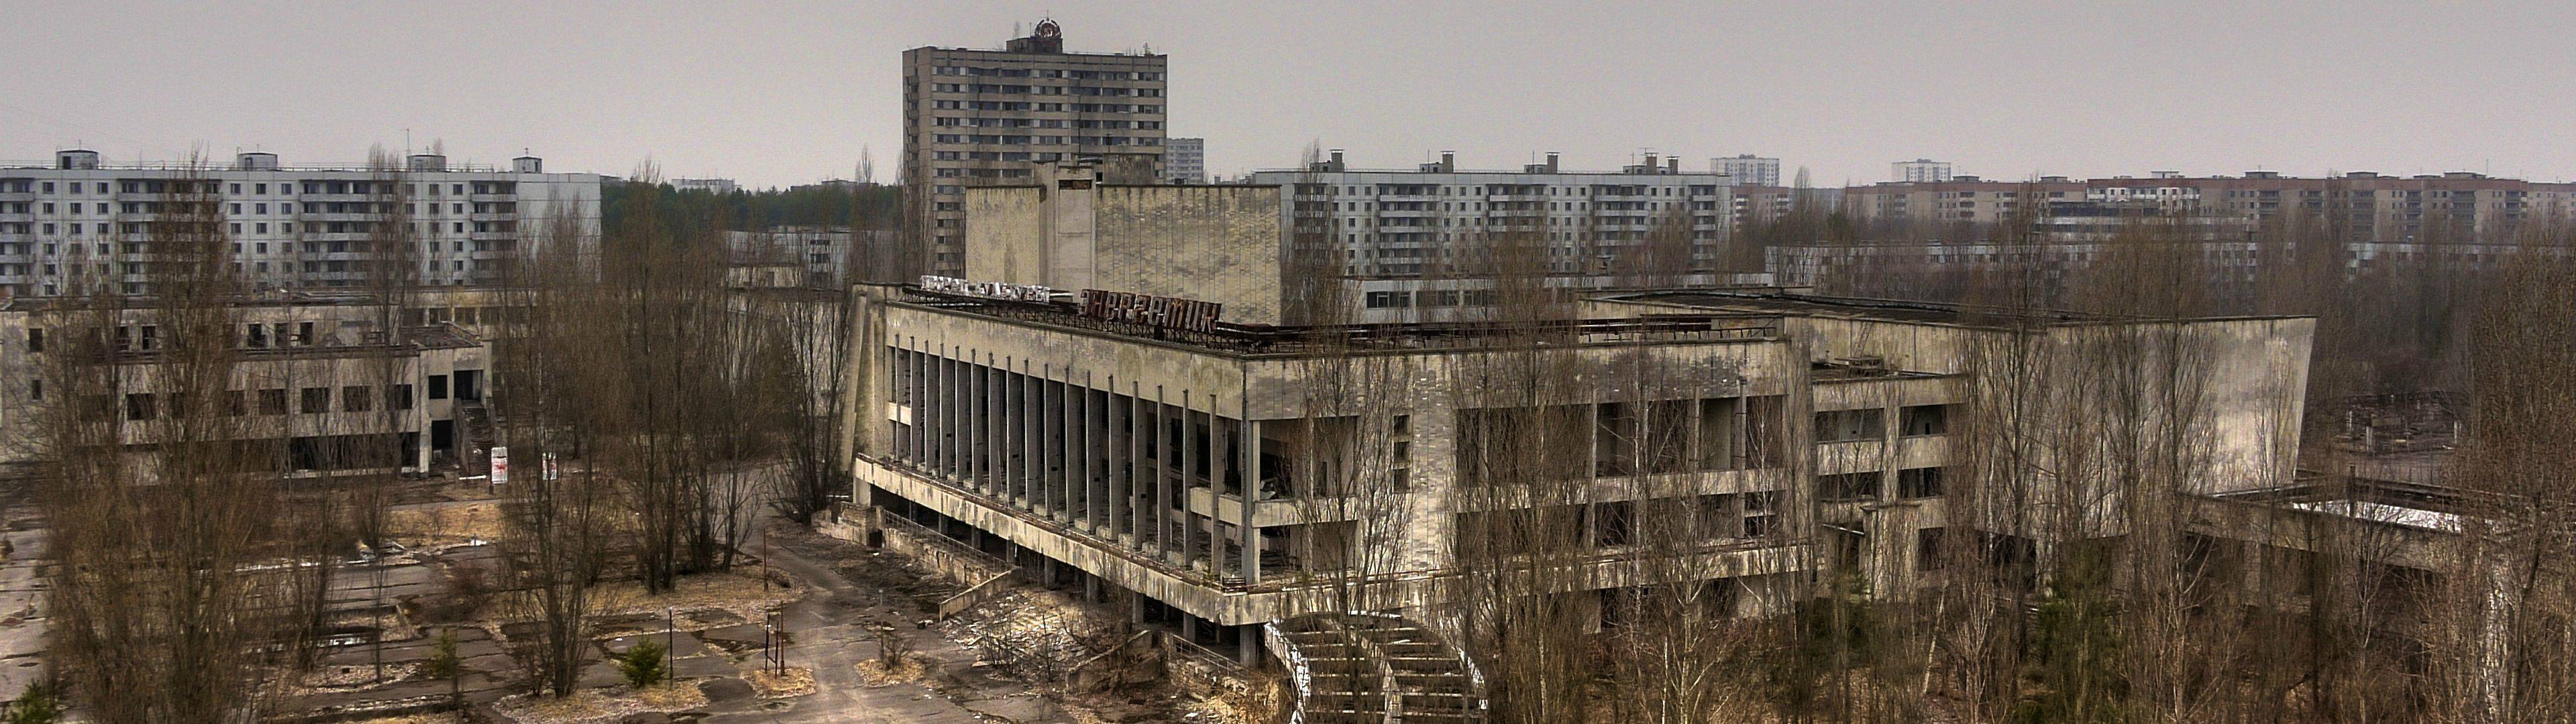 Pripyat HD Wallpaper Background Image Id